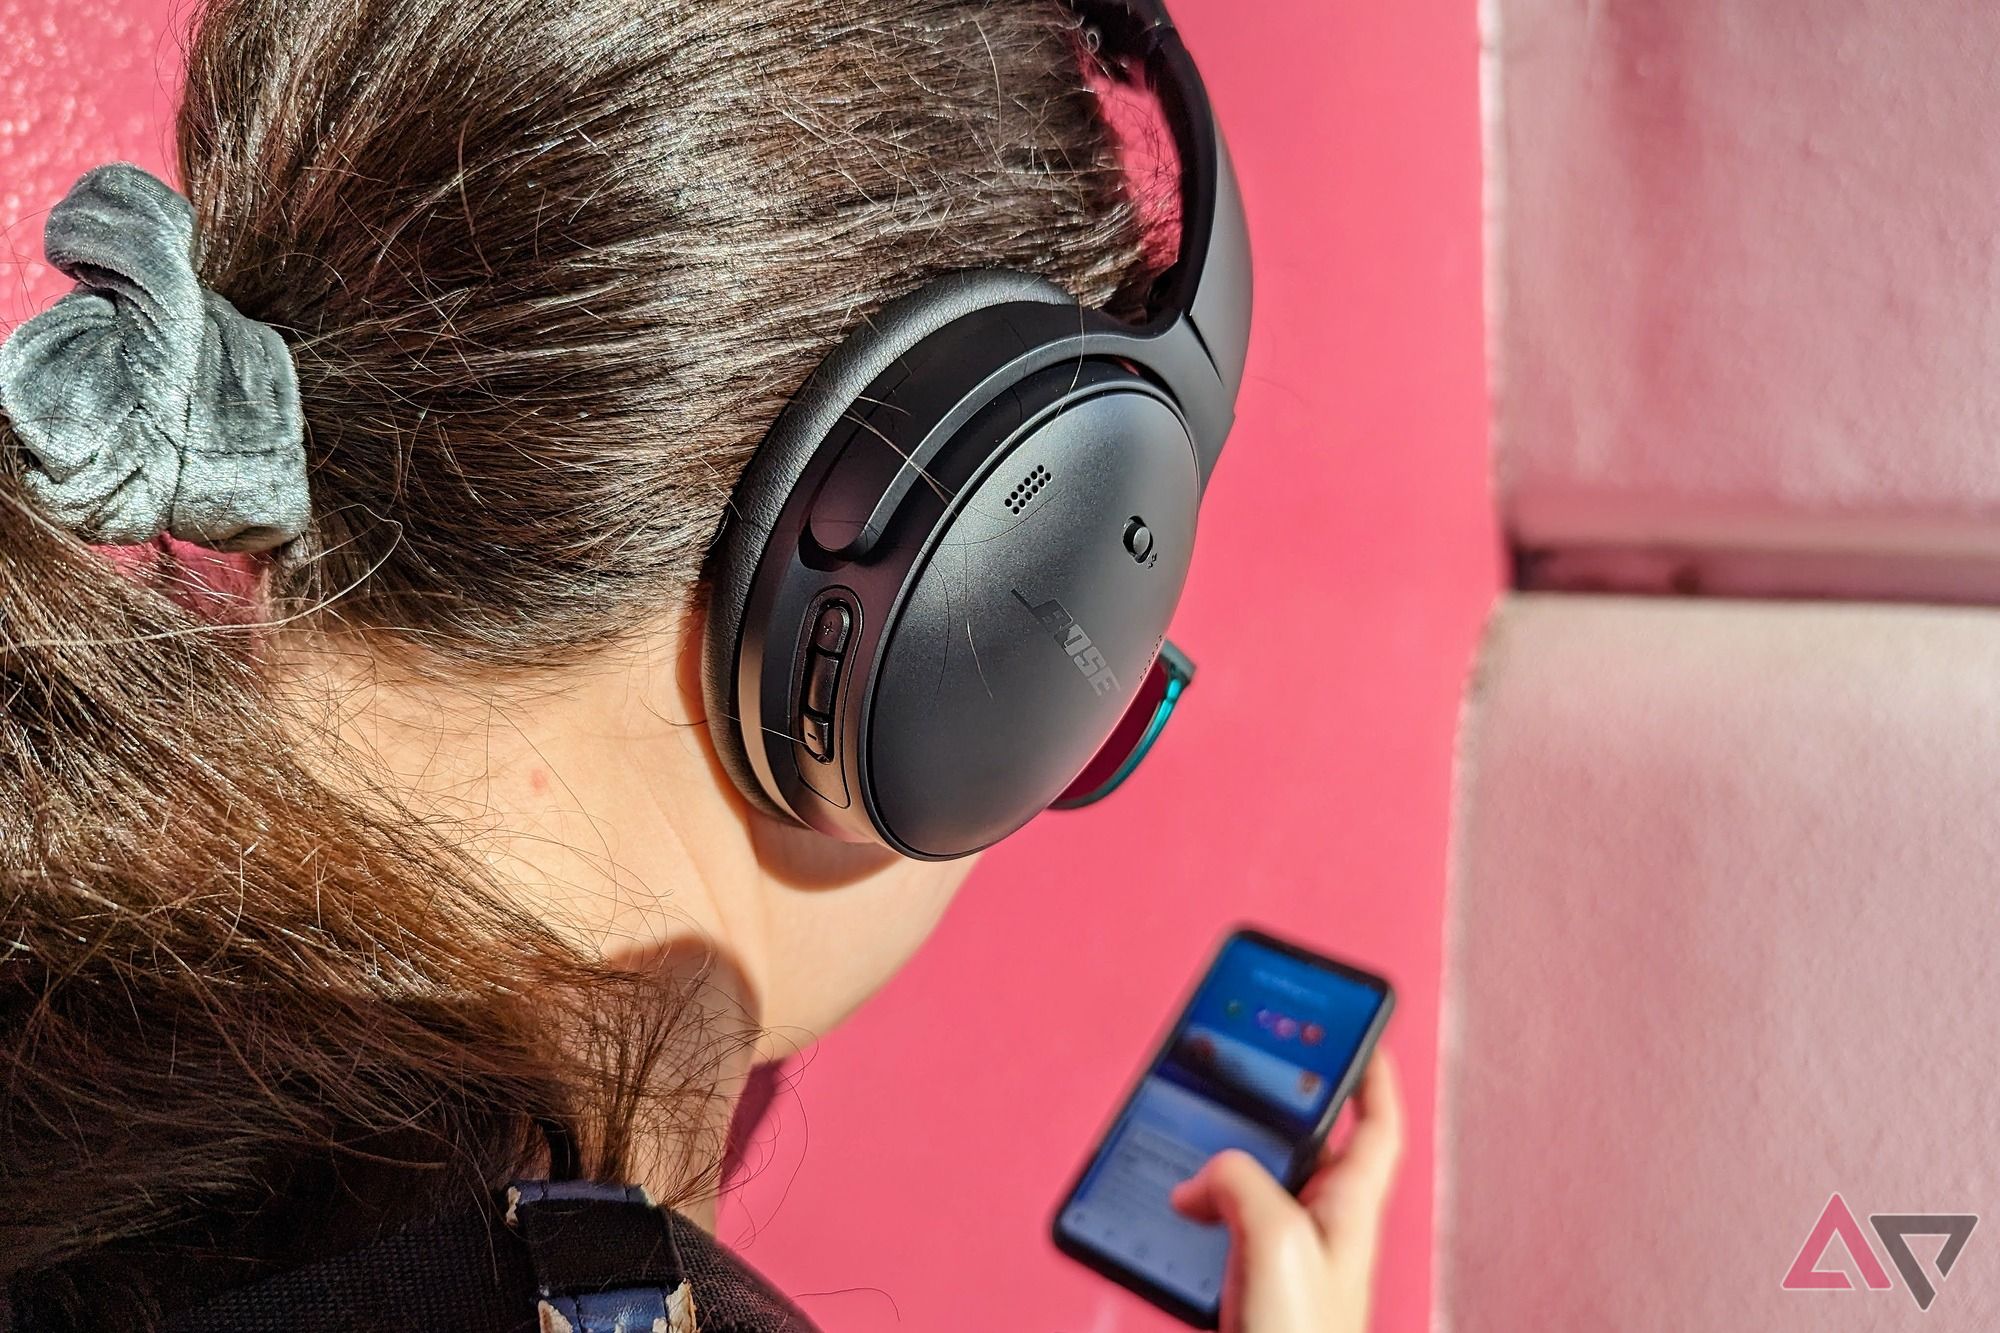 The Bose QuietComfort Headphones block out crowd noise at Walt Disney World